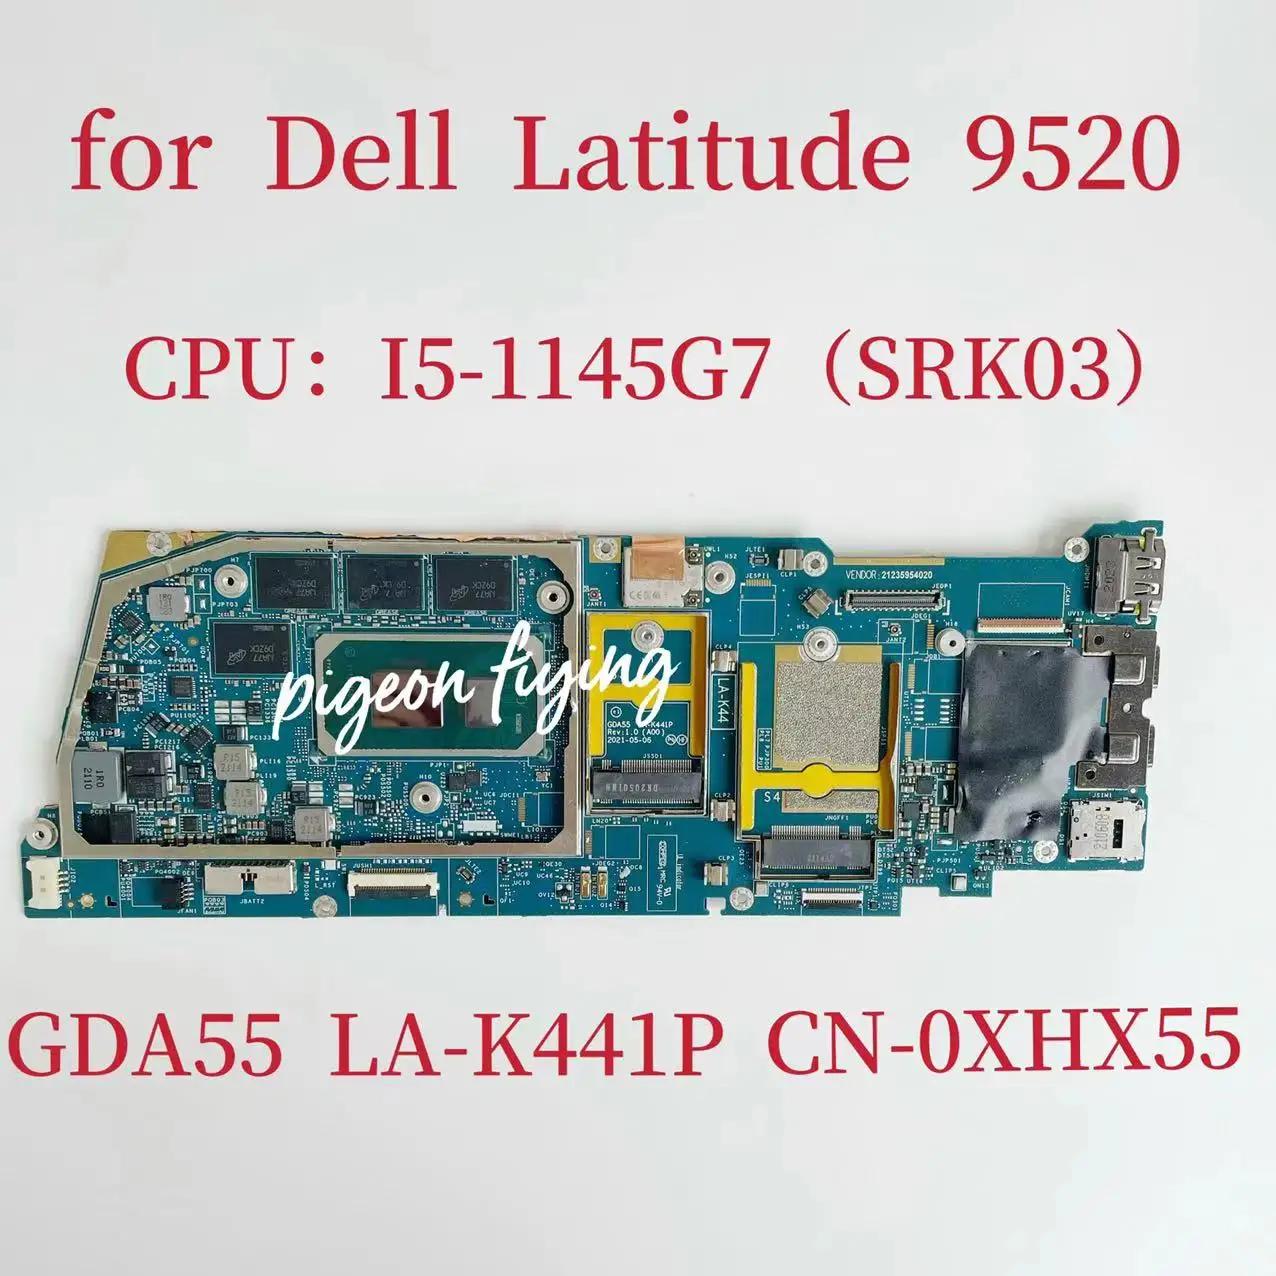 

LA-K441P Mainboard For Dell Latitude 9520 Laptop Motherboard CPU:I5-1145G7 SRK03 RAM:16GB CN-0XHX55 0XHX55 XHX55 100% Test OK